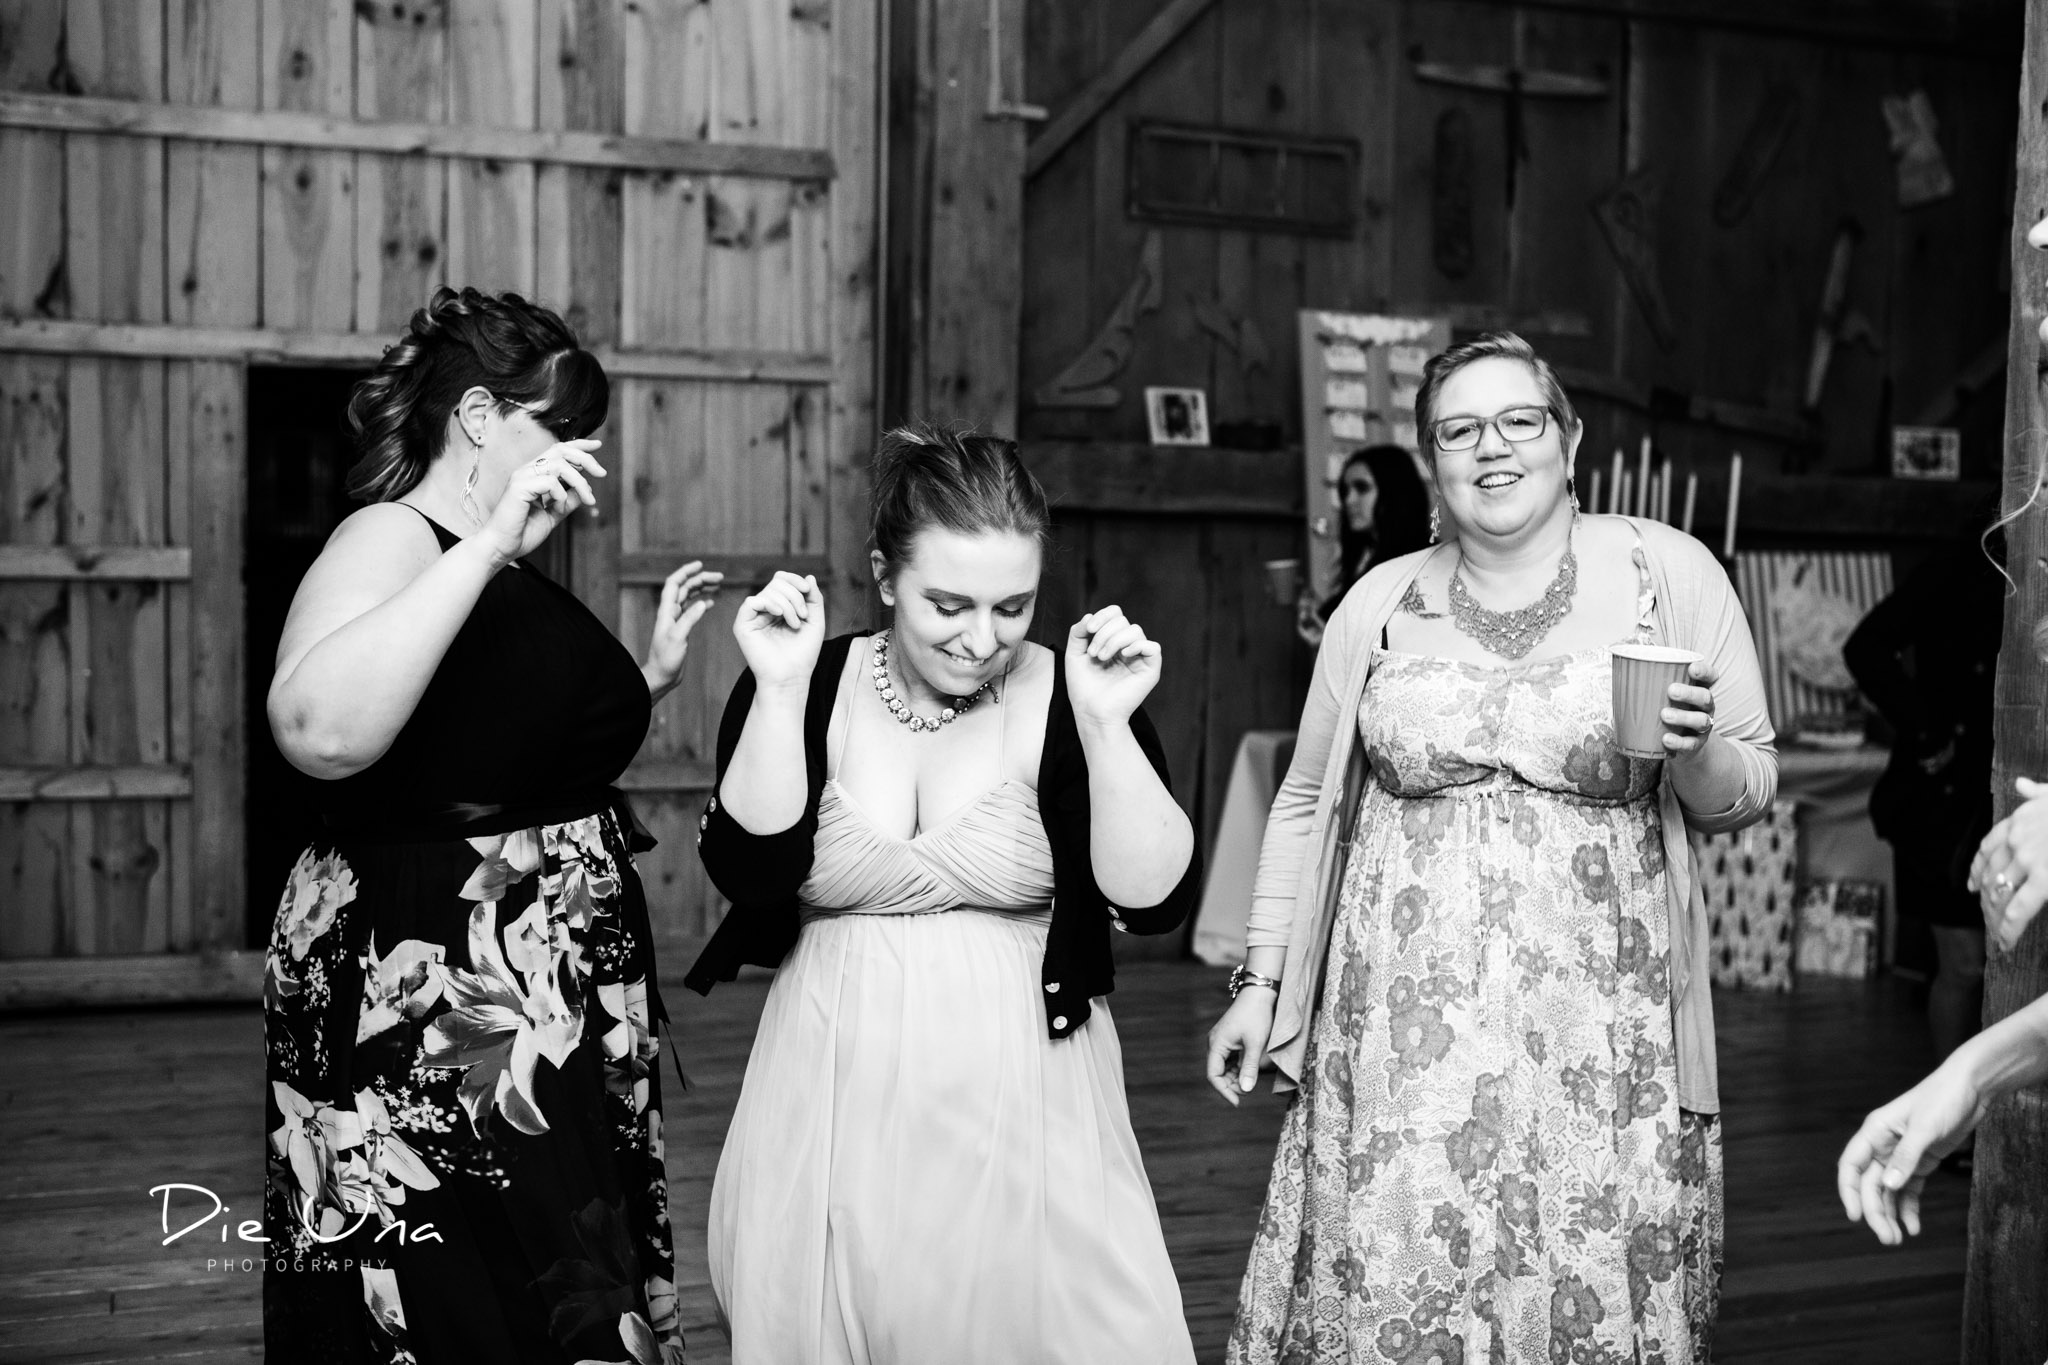 wedding guests dancing during barn wedding reception.jpg